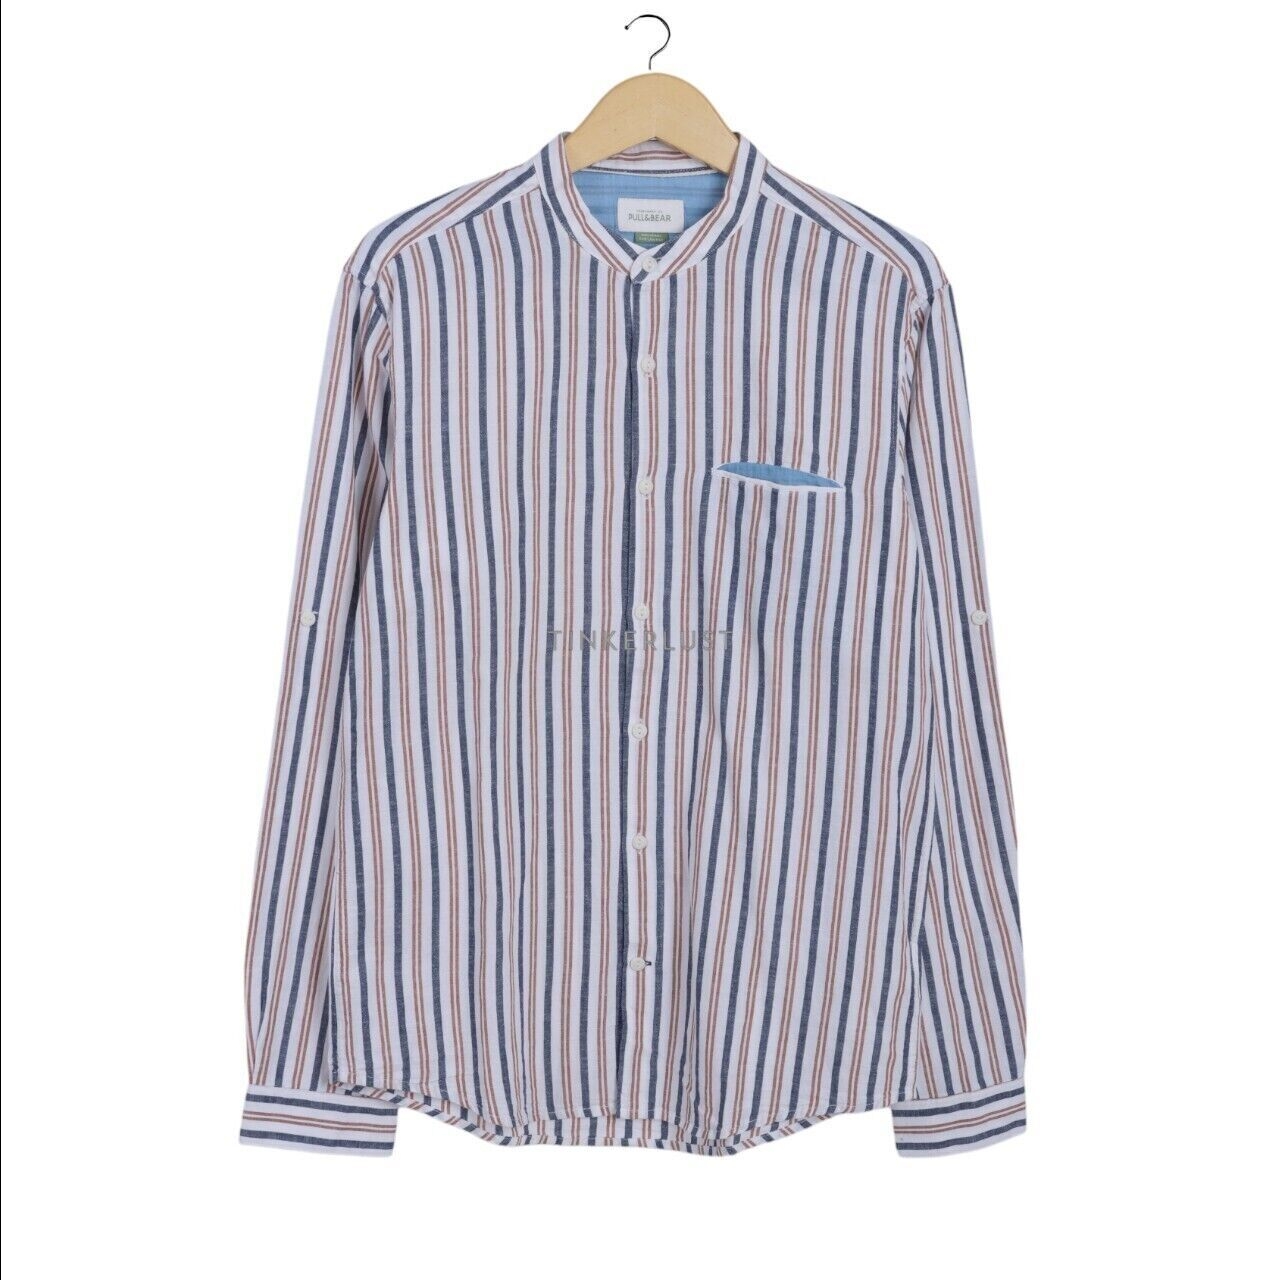 Pull & Bear Multi Stripes Long Sleeve Shirt